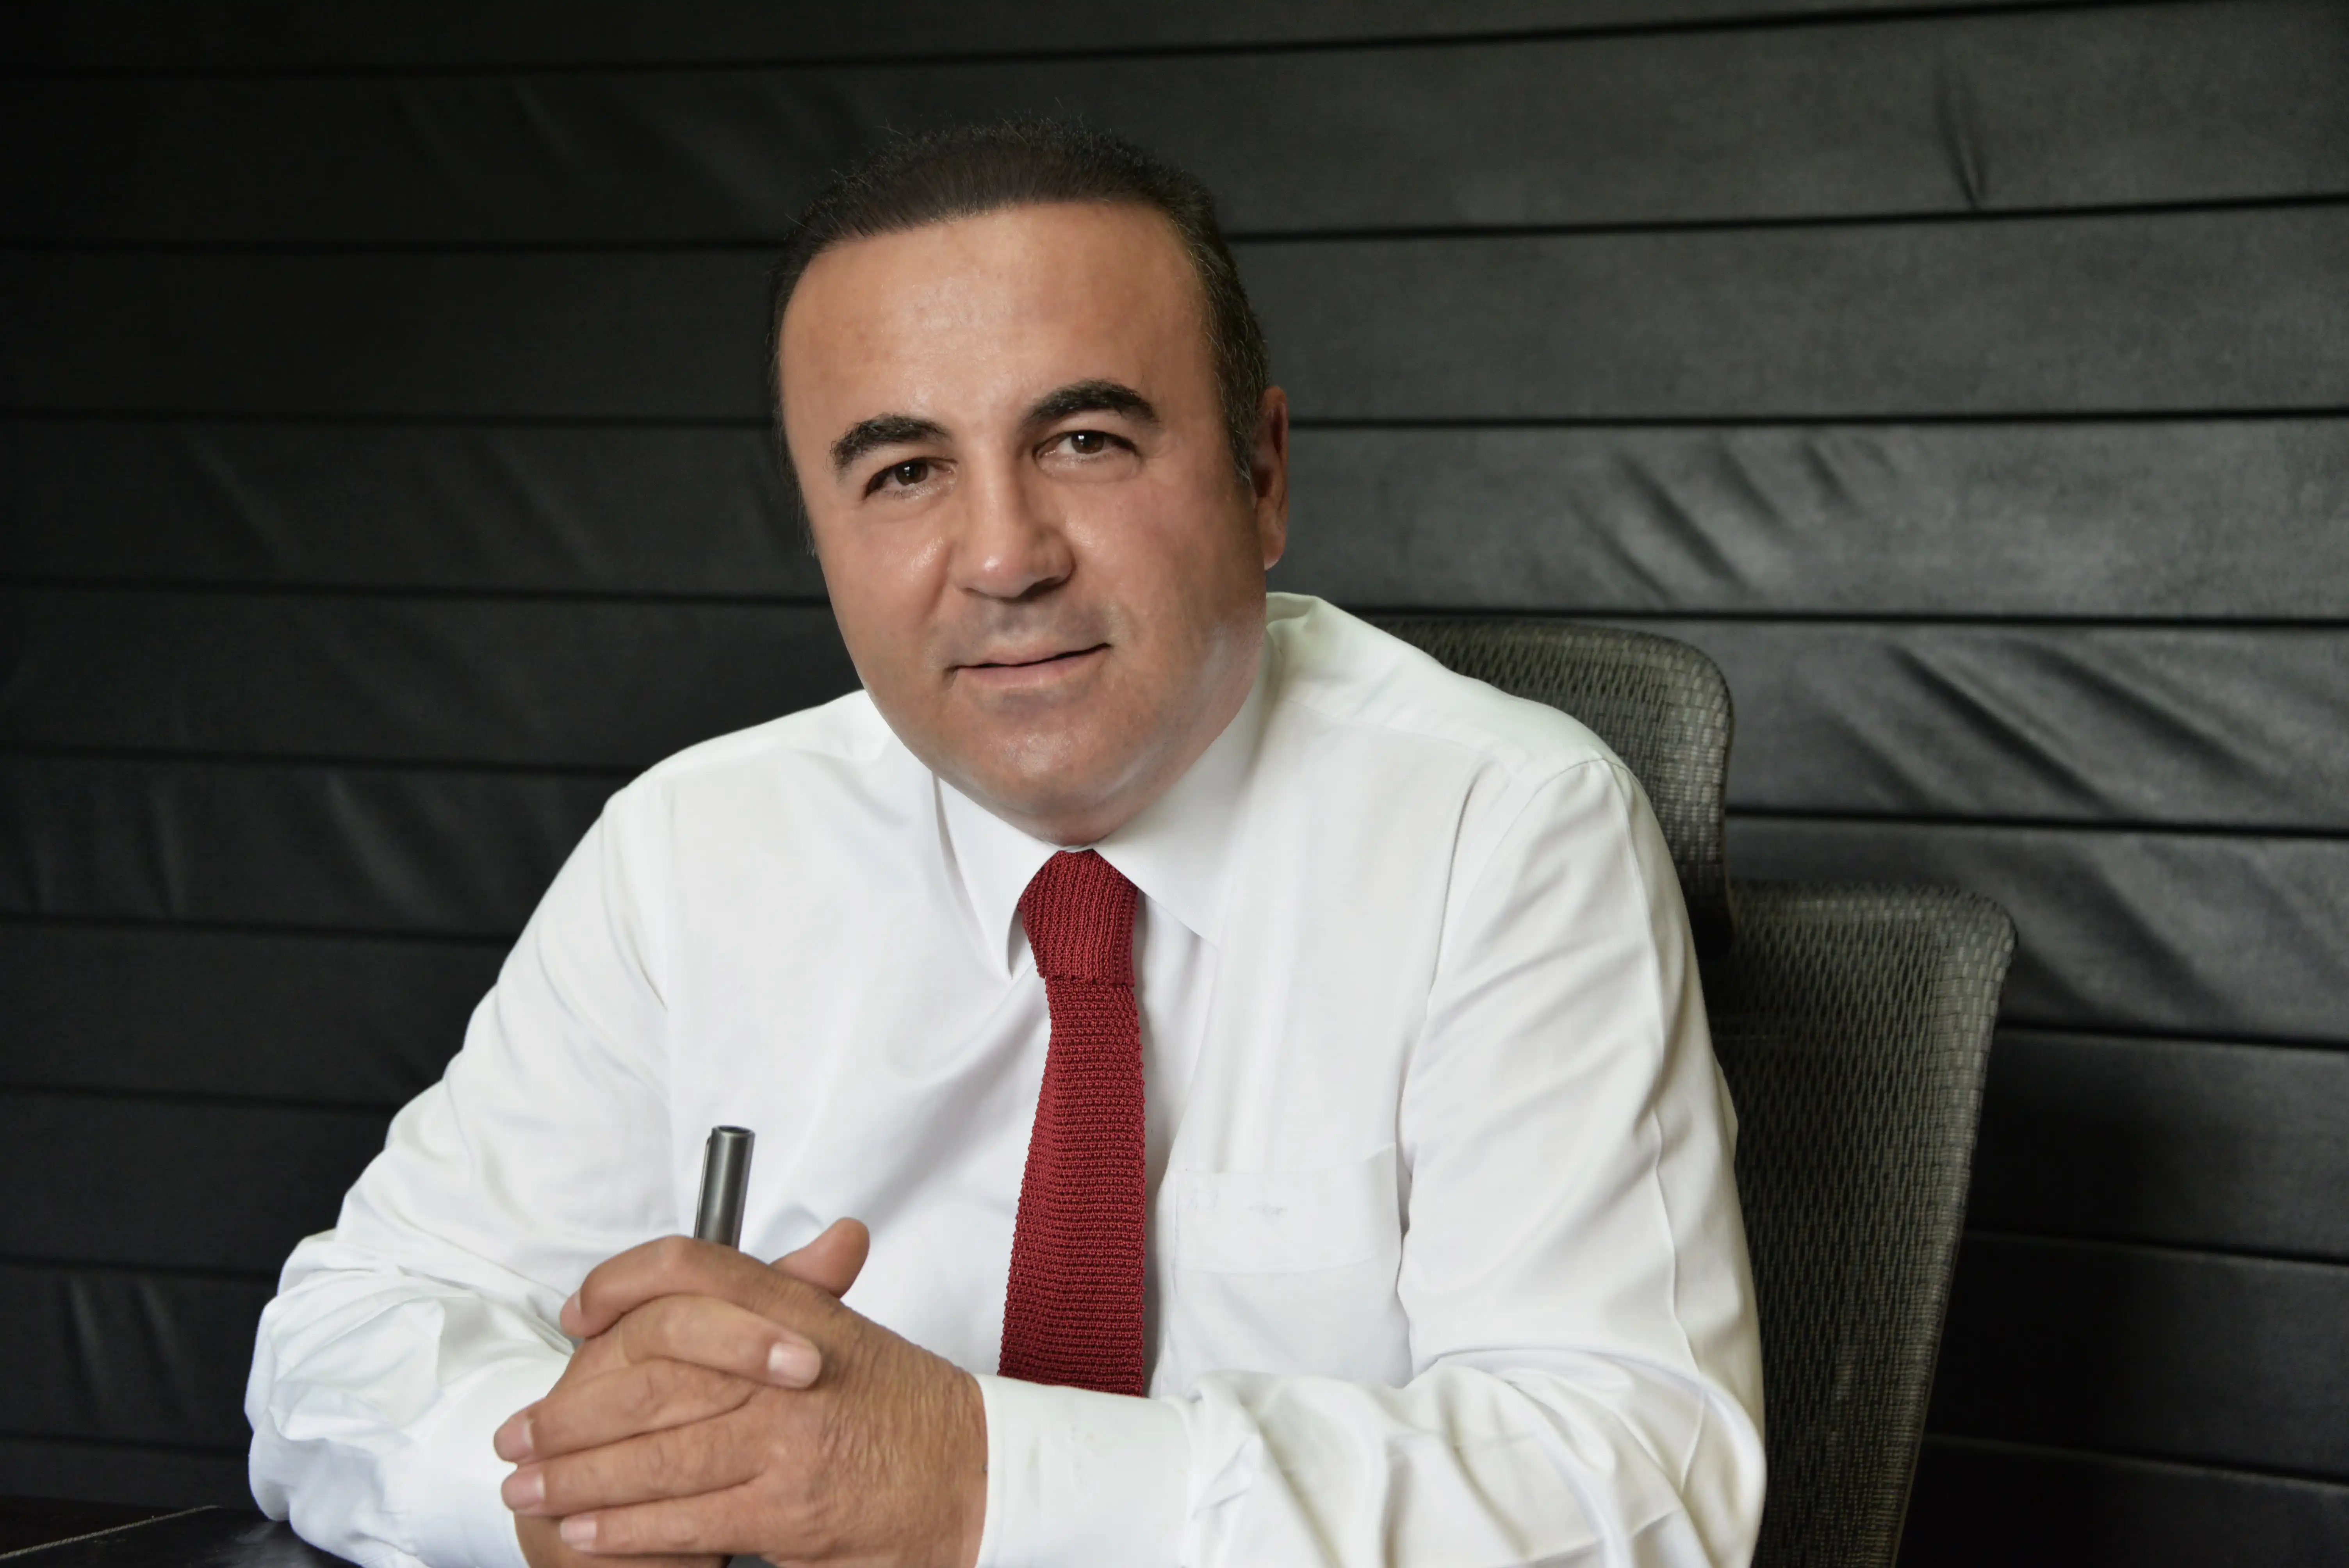 Ahmet Baydar